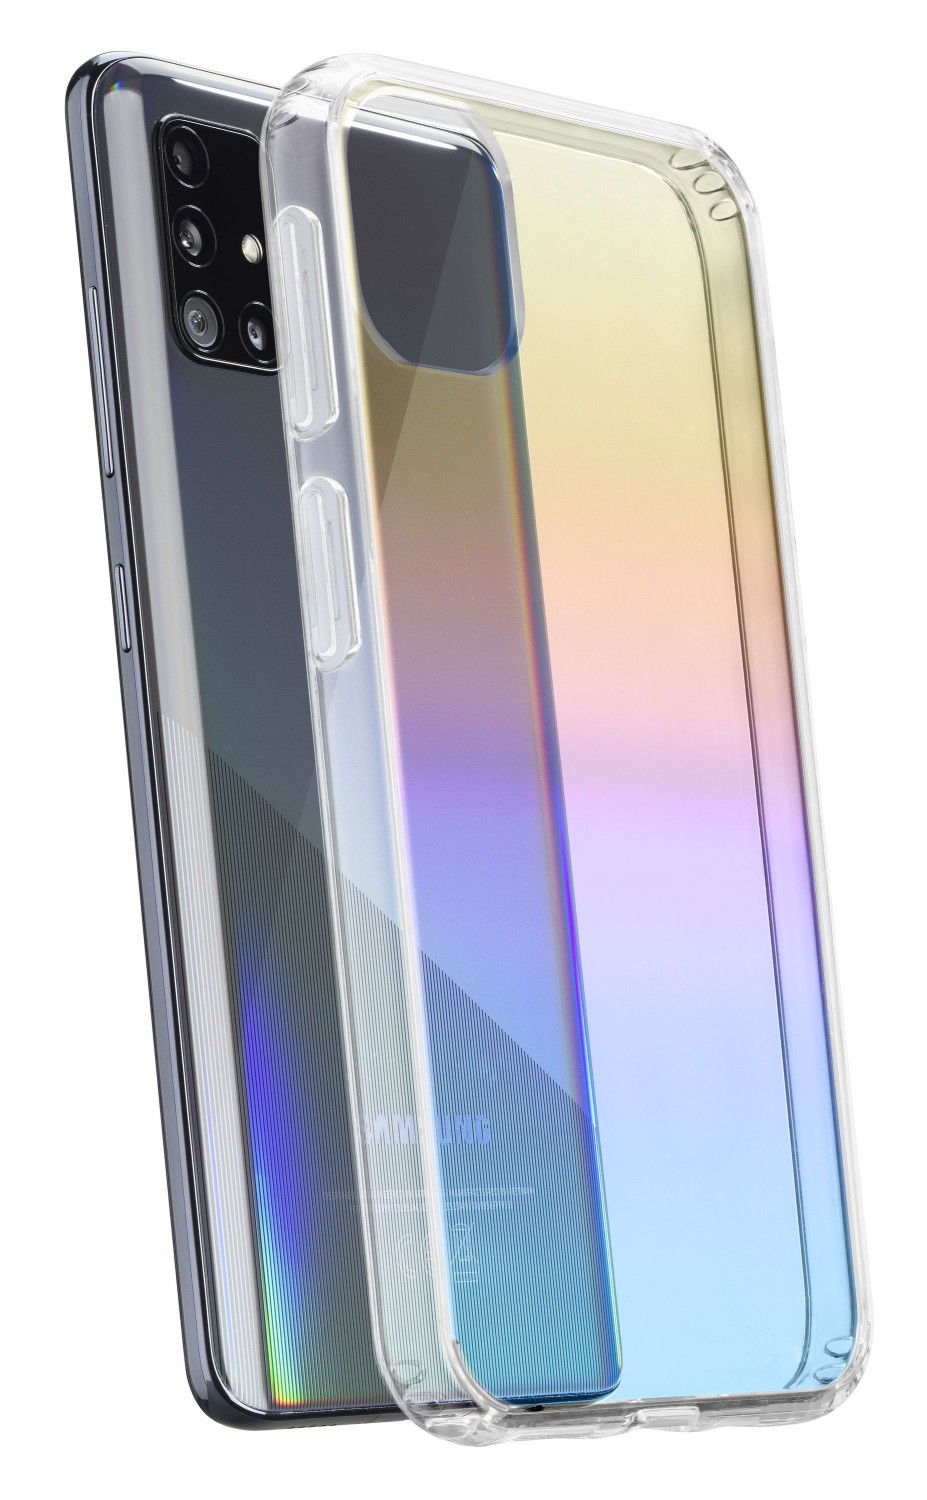 Cellularline Prisma duhový kryt Samsung Galaxy A51, polotransparentní